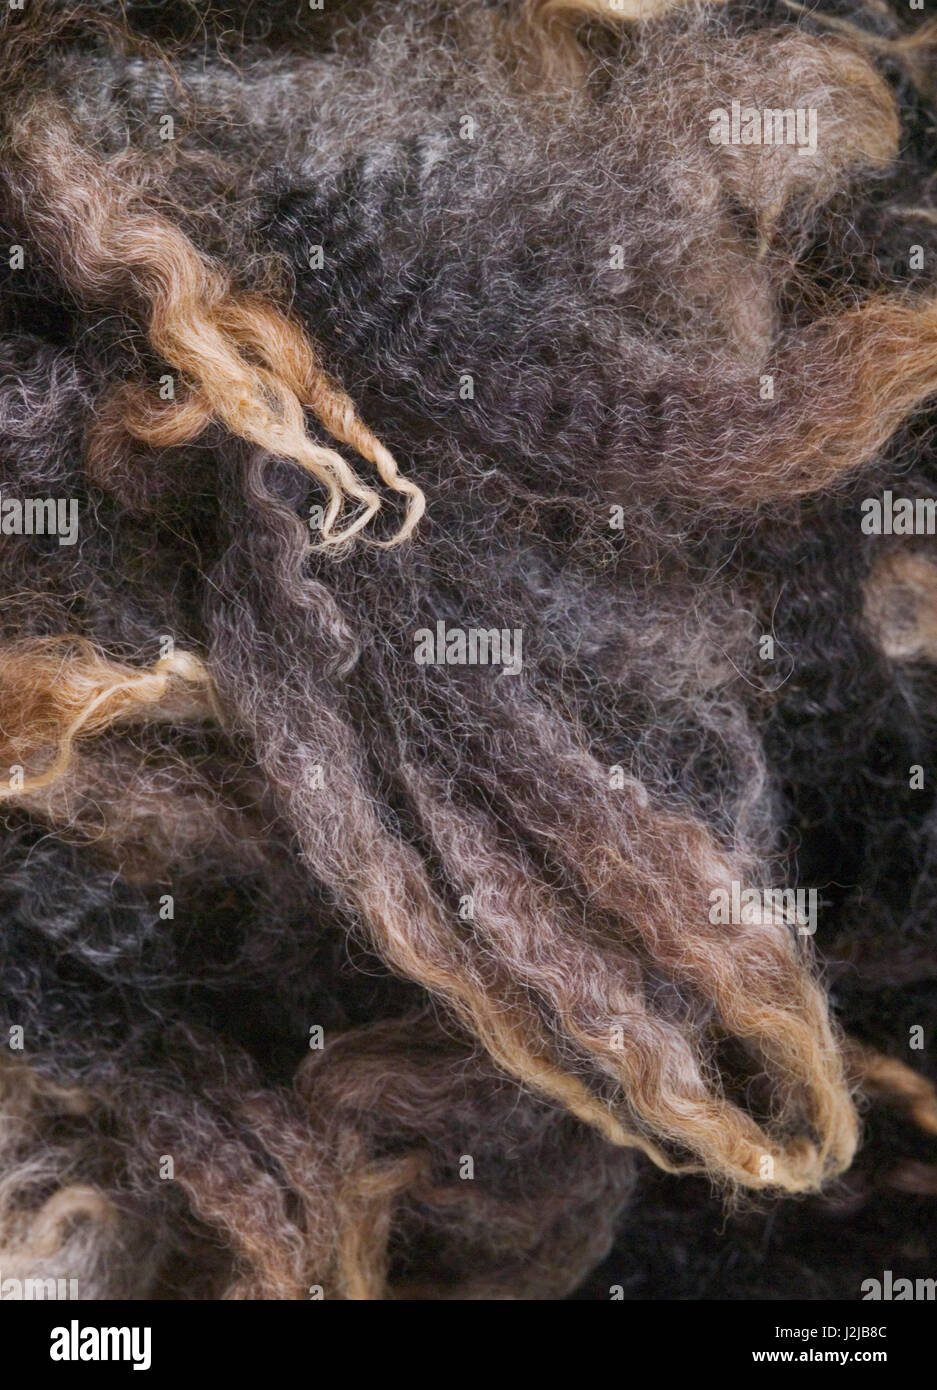 Staples of raw organic wool, awaiting processsing Stock Photo